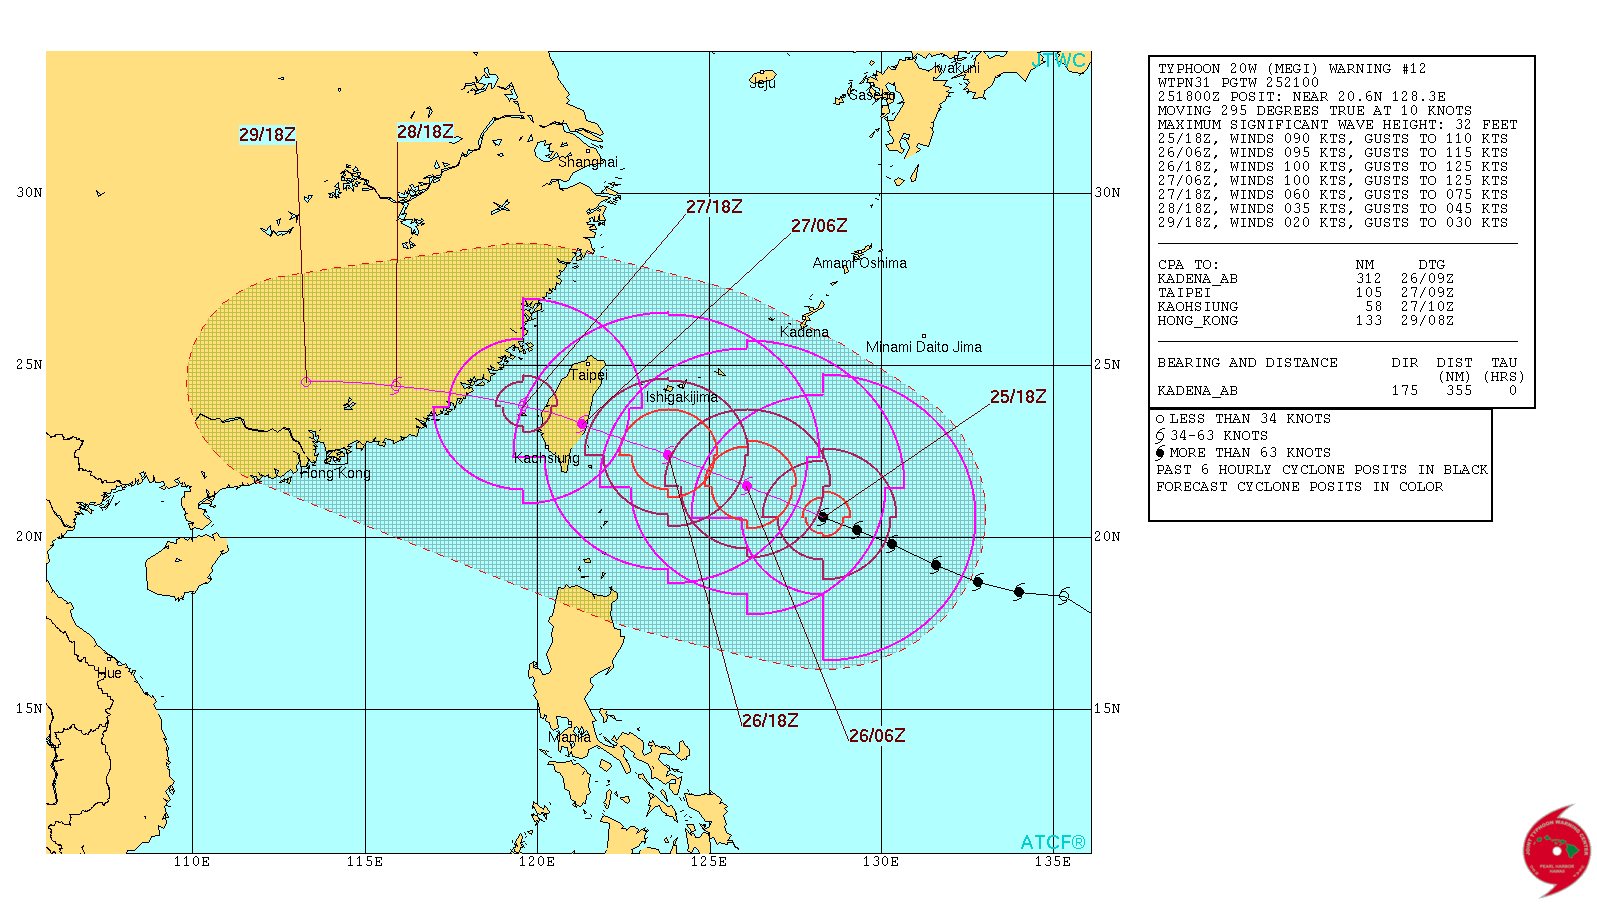 Typhoon Megi forecast track by JTWC at 21:00 UTC on September 25, 2016